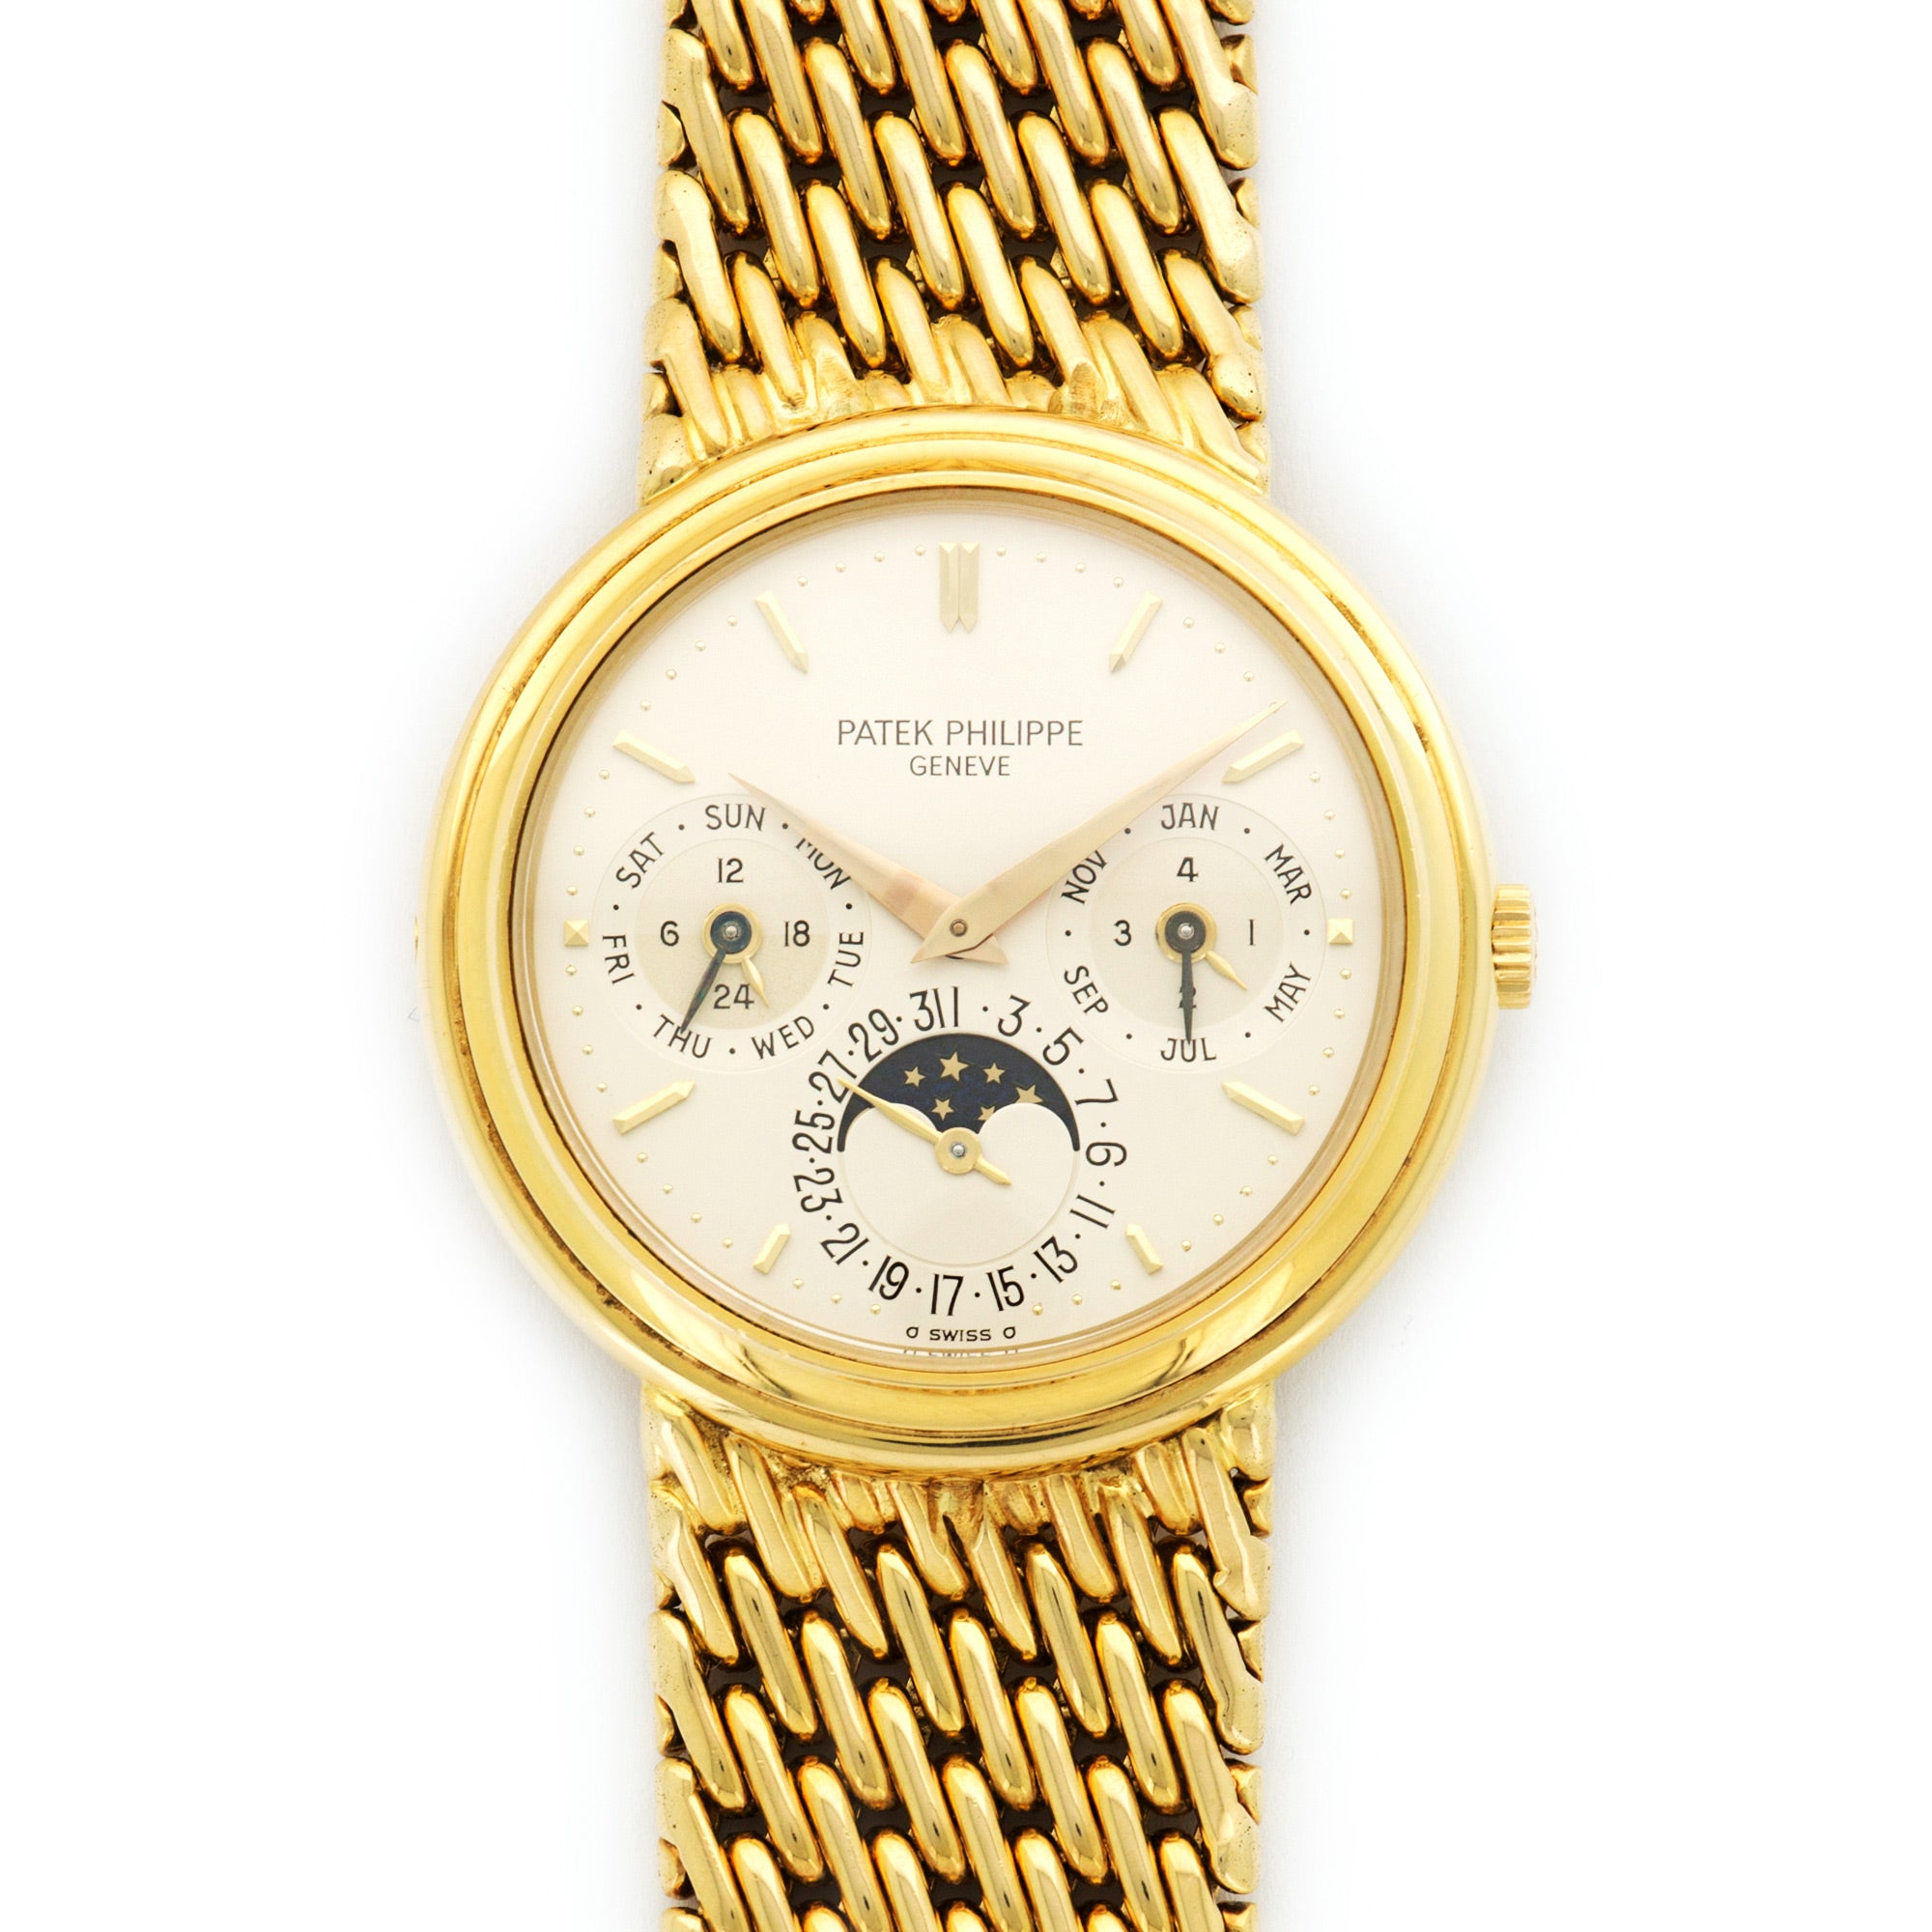 Patek Philippe - Patek Philippe Yellow Gold Perpetual Calendar Automatic Watch Ref. 3945 - The Keystone Watches